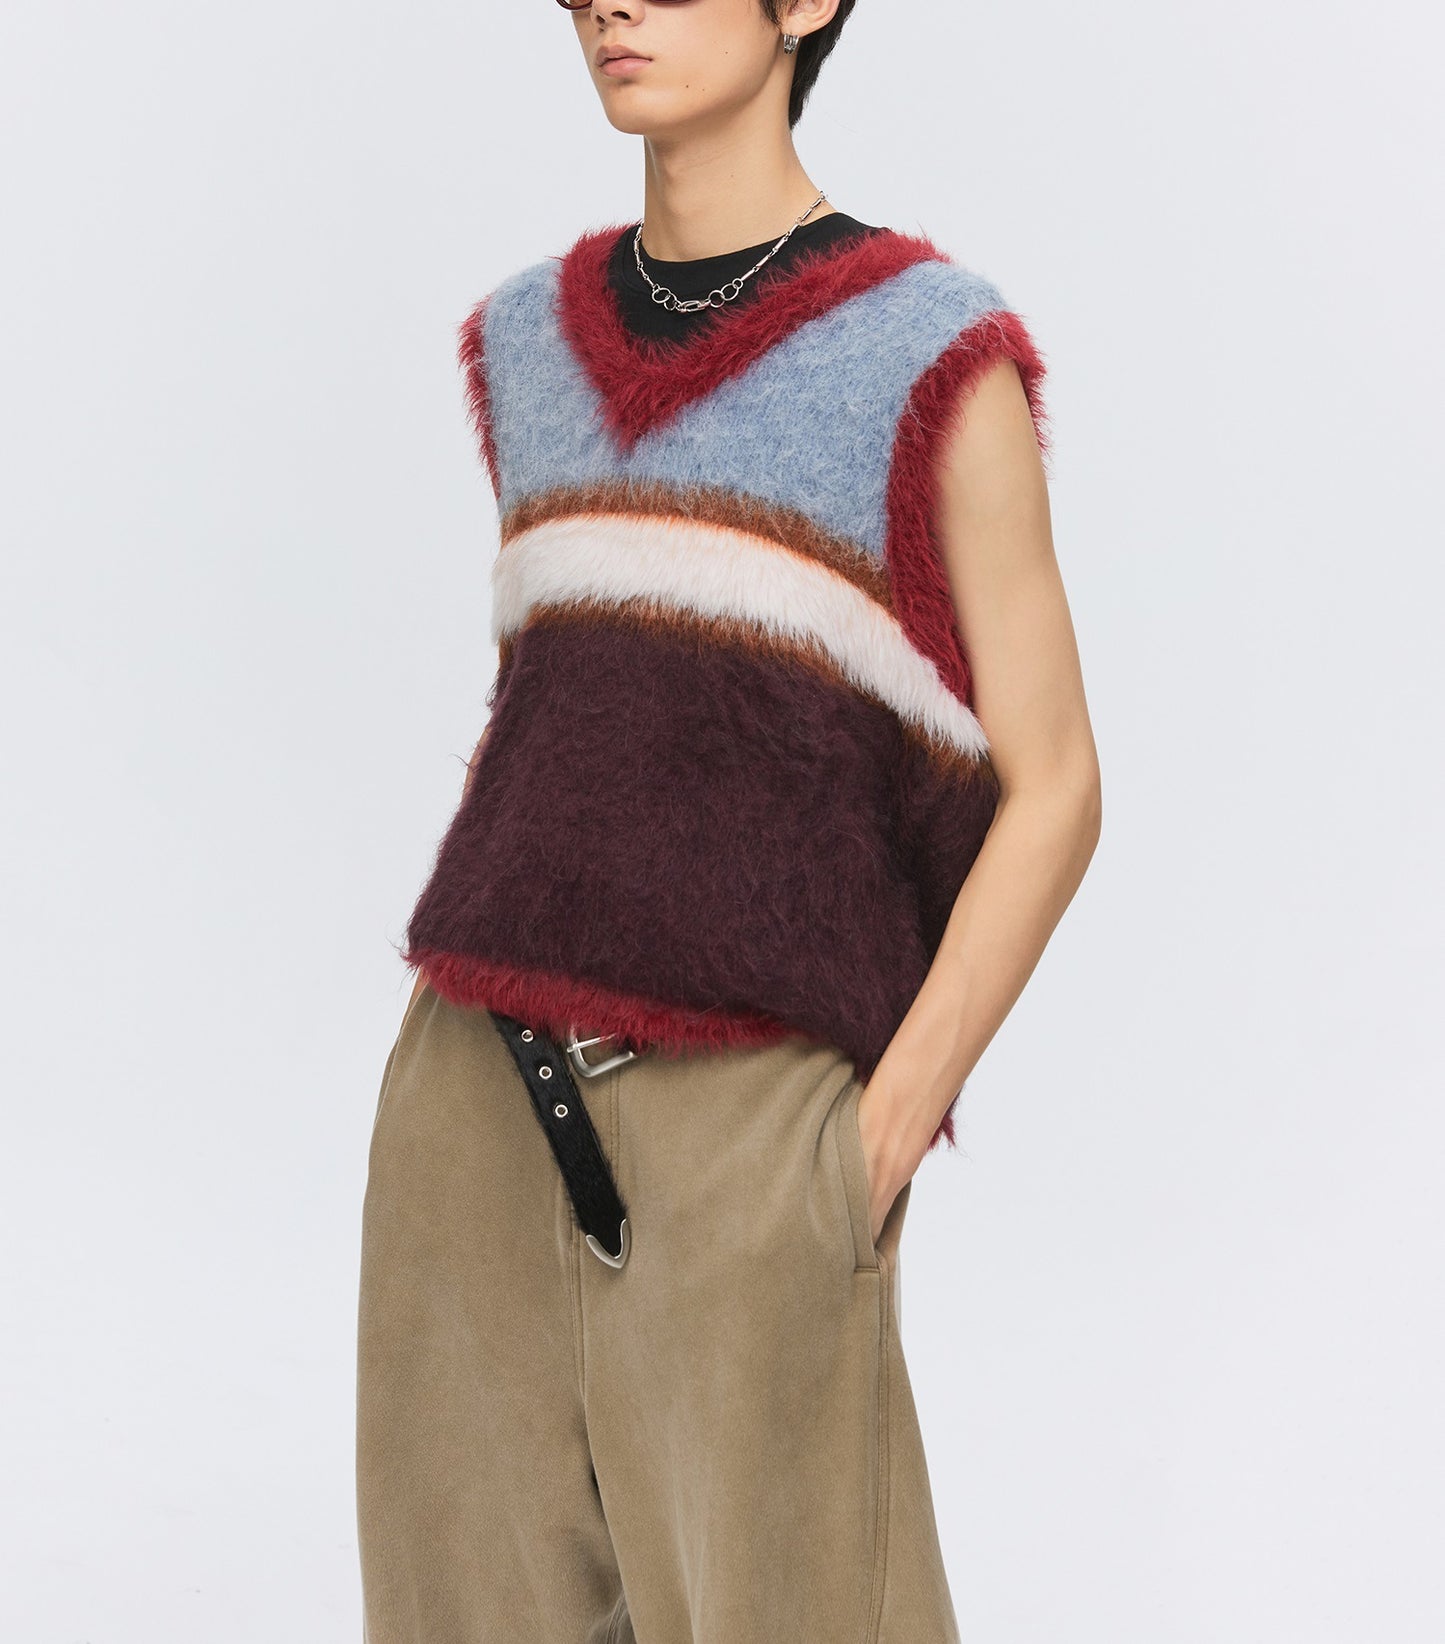 Wool Blended Long Velvet Wool Contrast Color Striped Knitted V-neck Vest Sweater